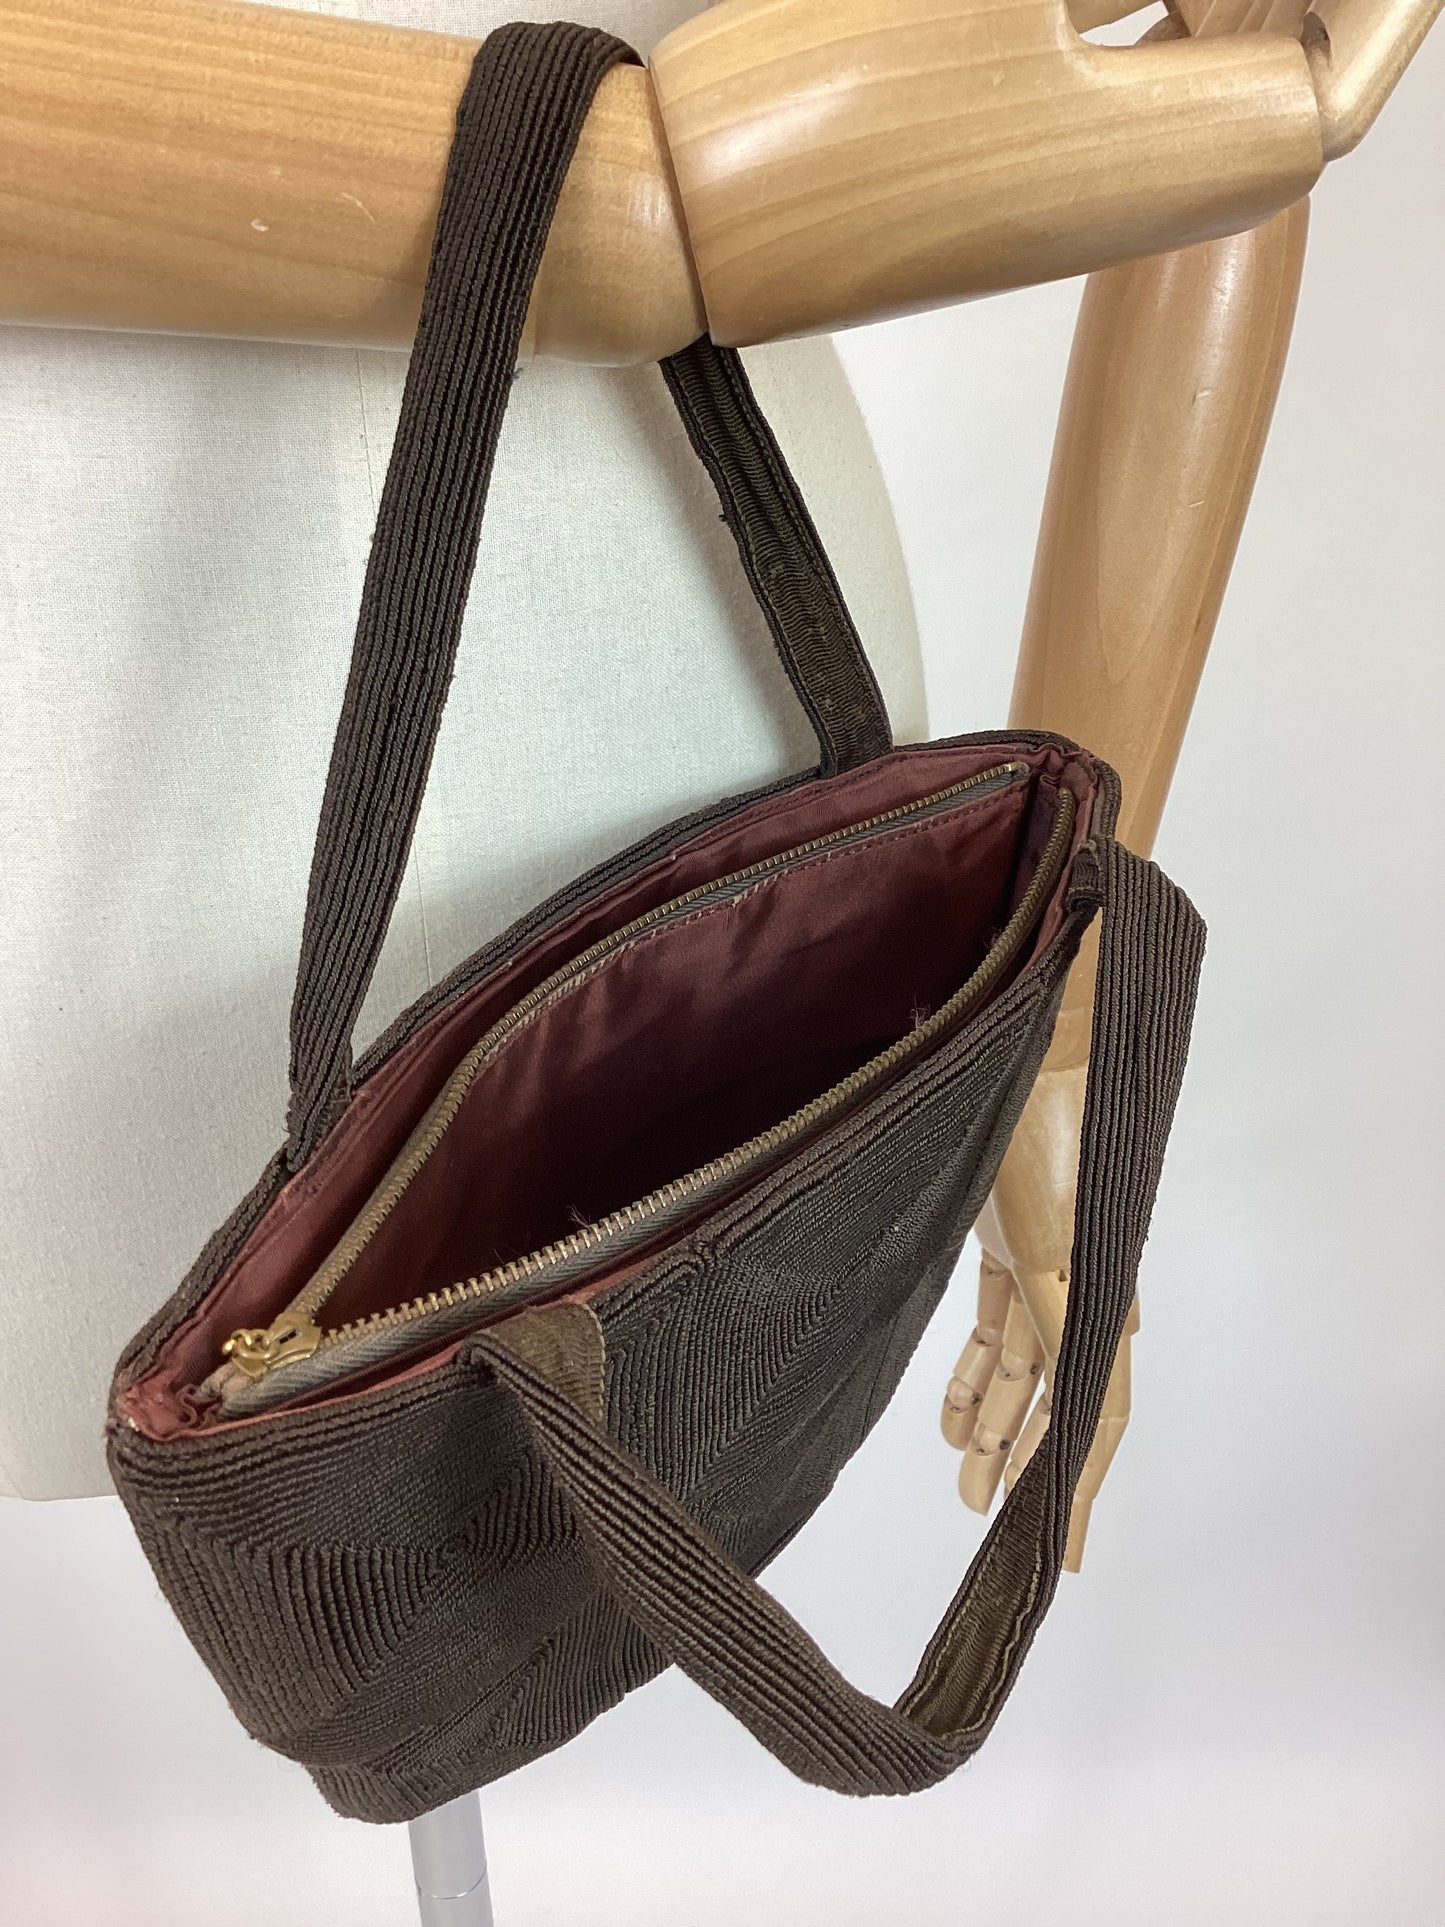 Original 1940’s Corde Handbag - Dark Chocolate Brown